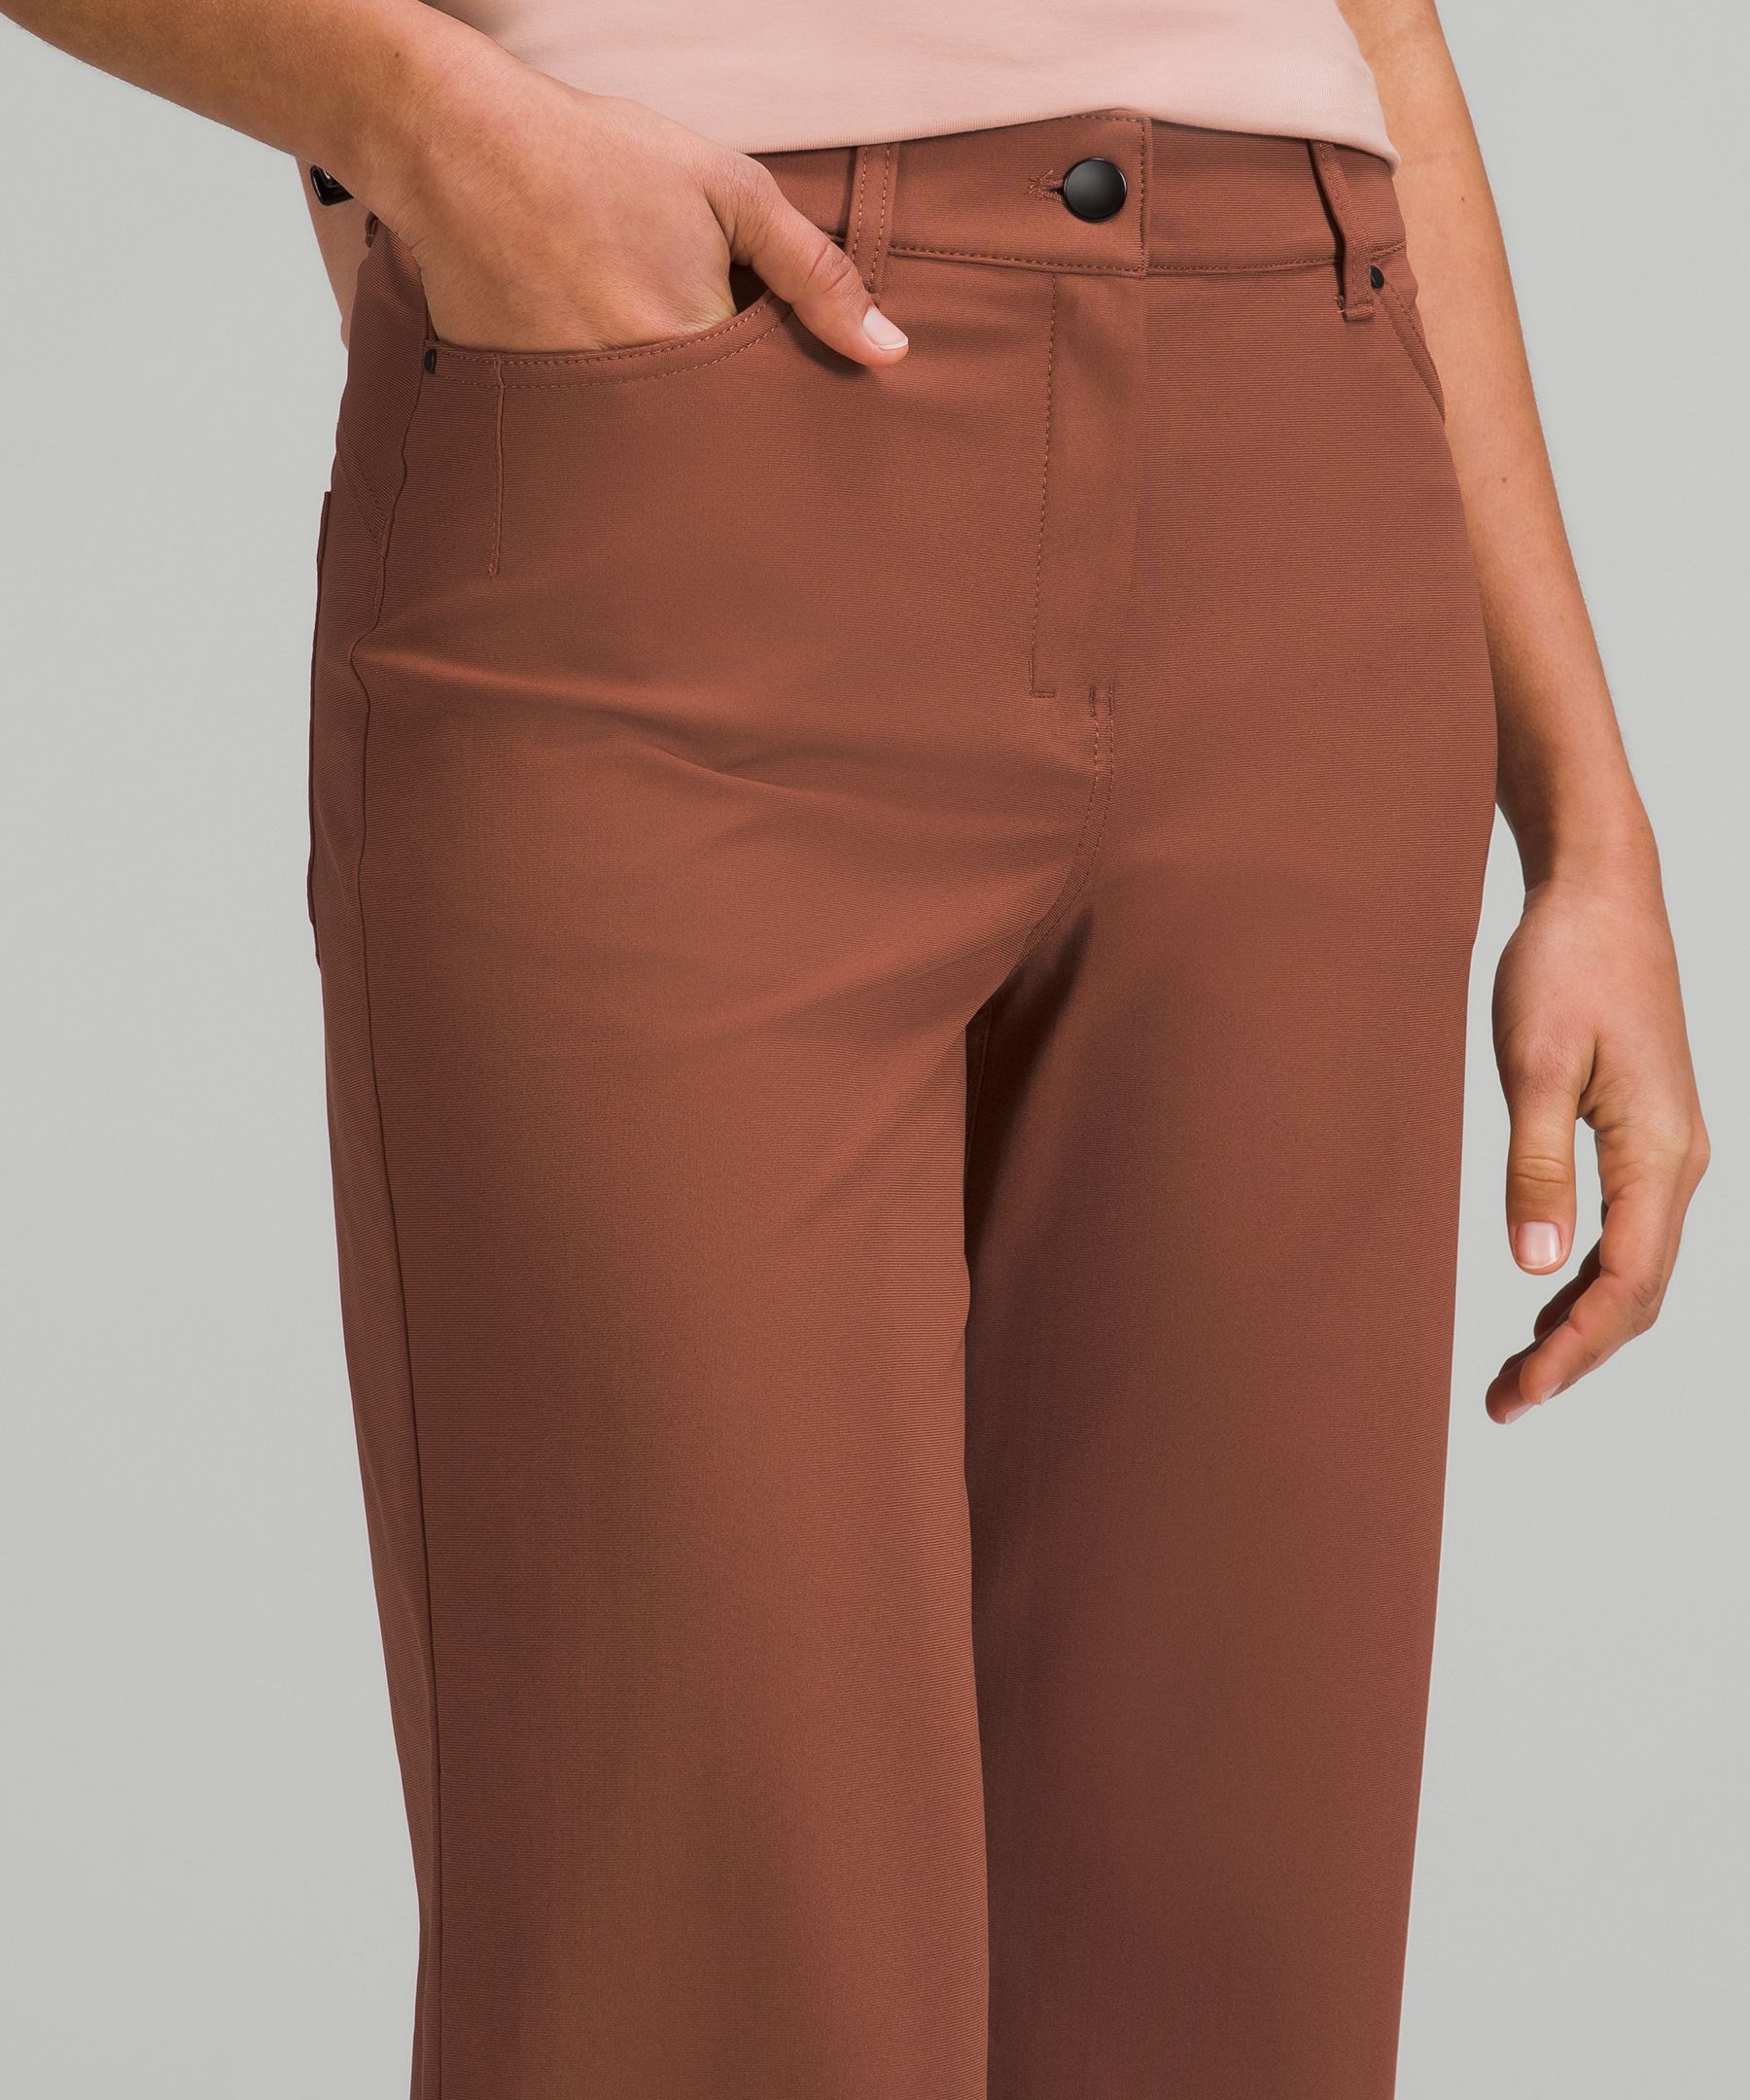 Lululemon City Sleek 5 Pocket Wide Leg Pant - 142351121